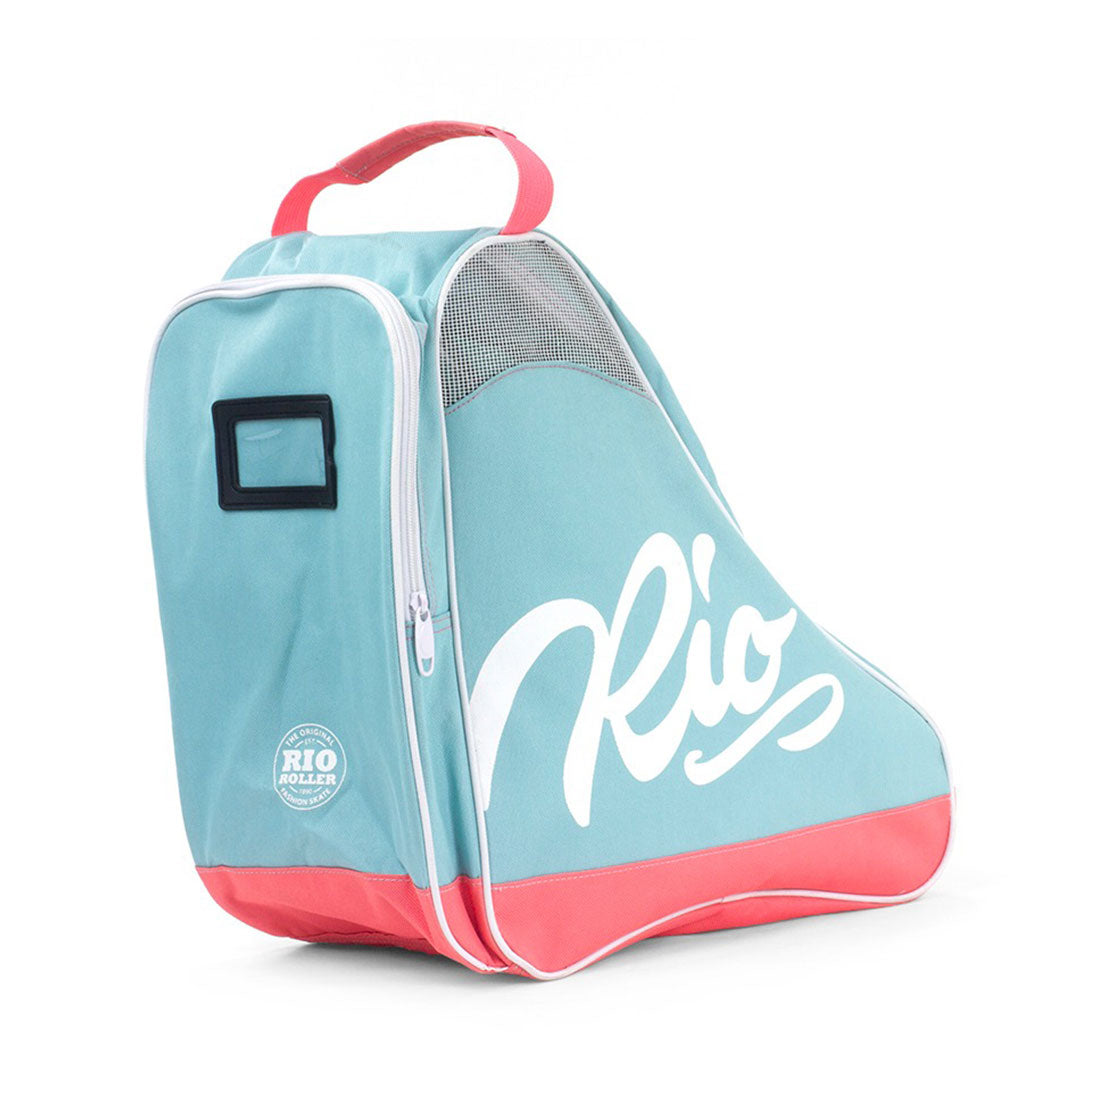 Rio Roller Script Skate Bag - Teal/Coral Bags and Backpacks